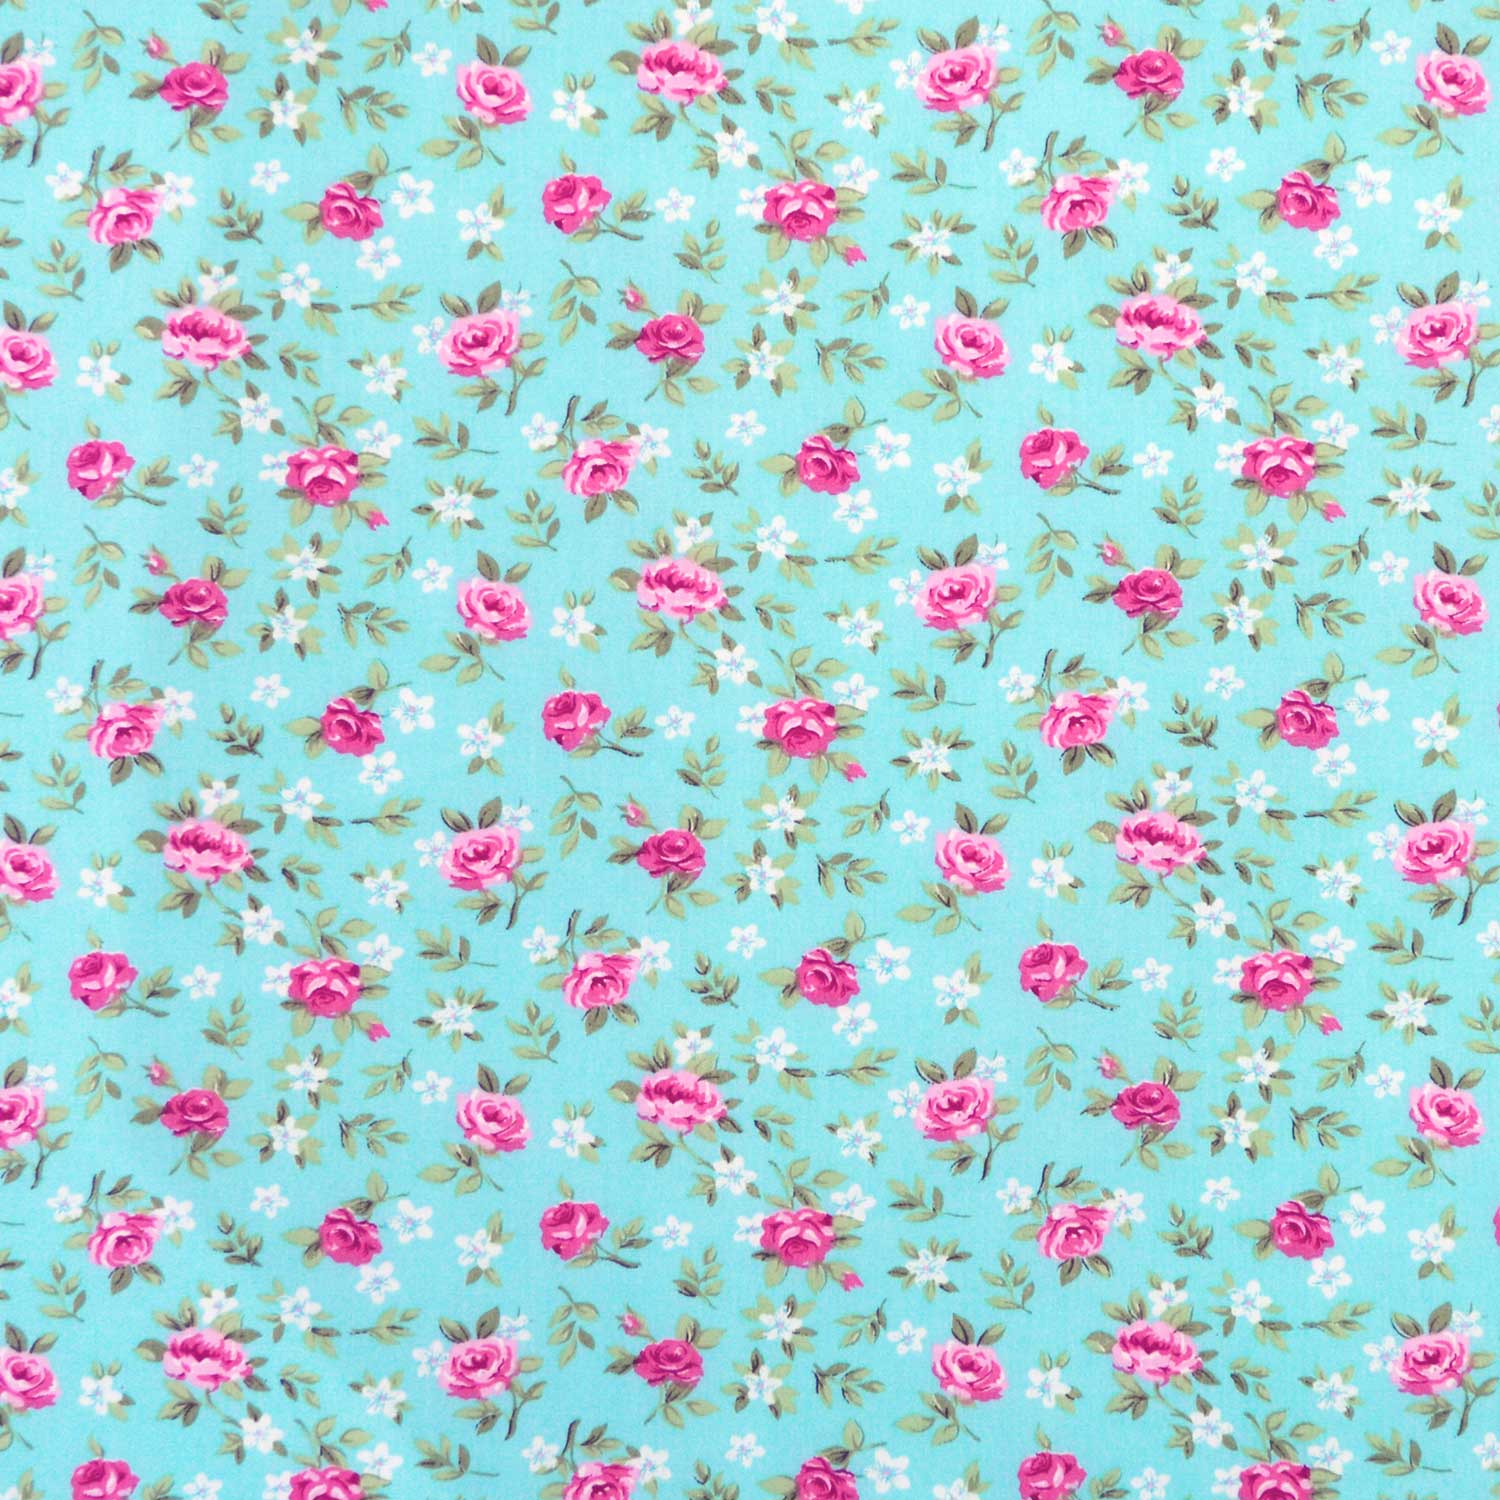 tecido-tricoline-estampado-floral-lucia-rosa-della-aviamentos-tecidos-caldeira-capa-11034